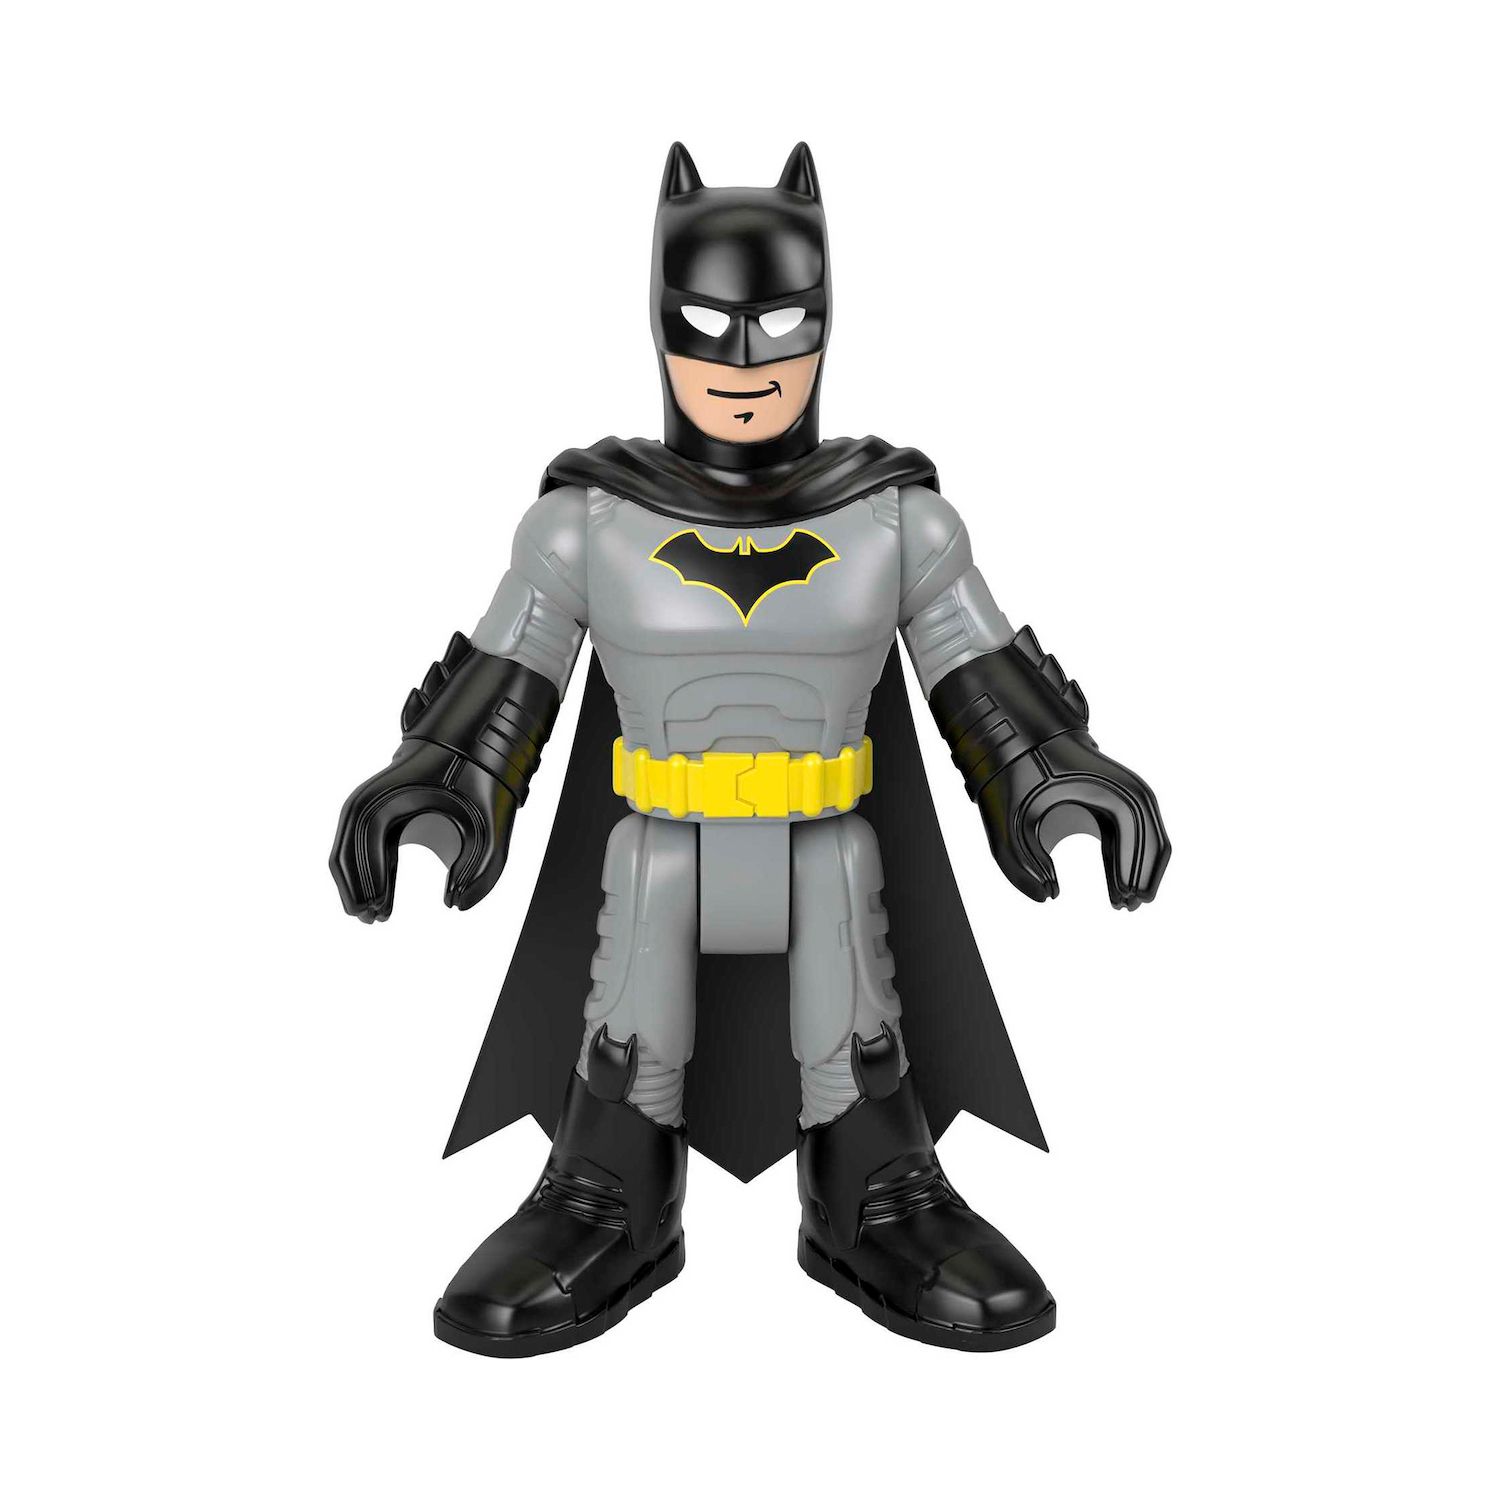 Imaginext DC Super Friends Batman XL Фигурка крестоносца в плаще Fisher-Price imaginext dc super friends бэтмен робо командный центр